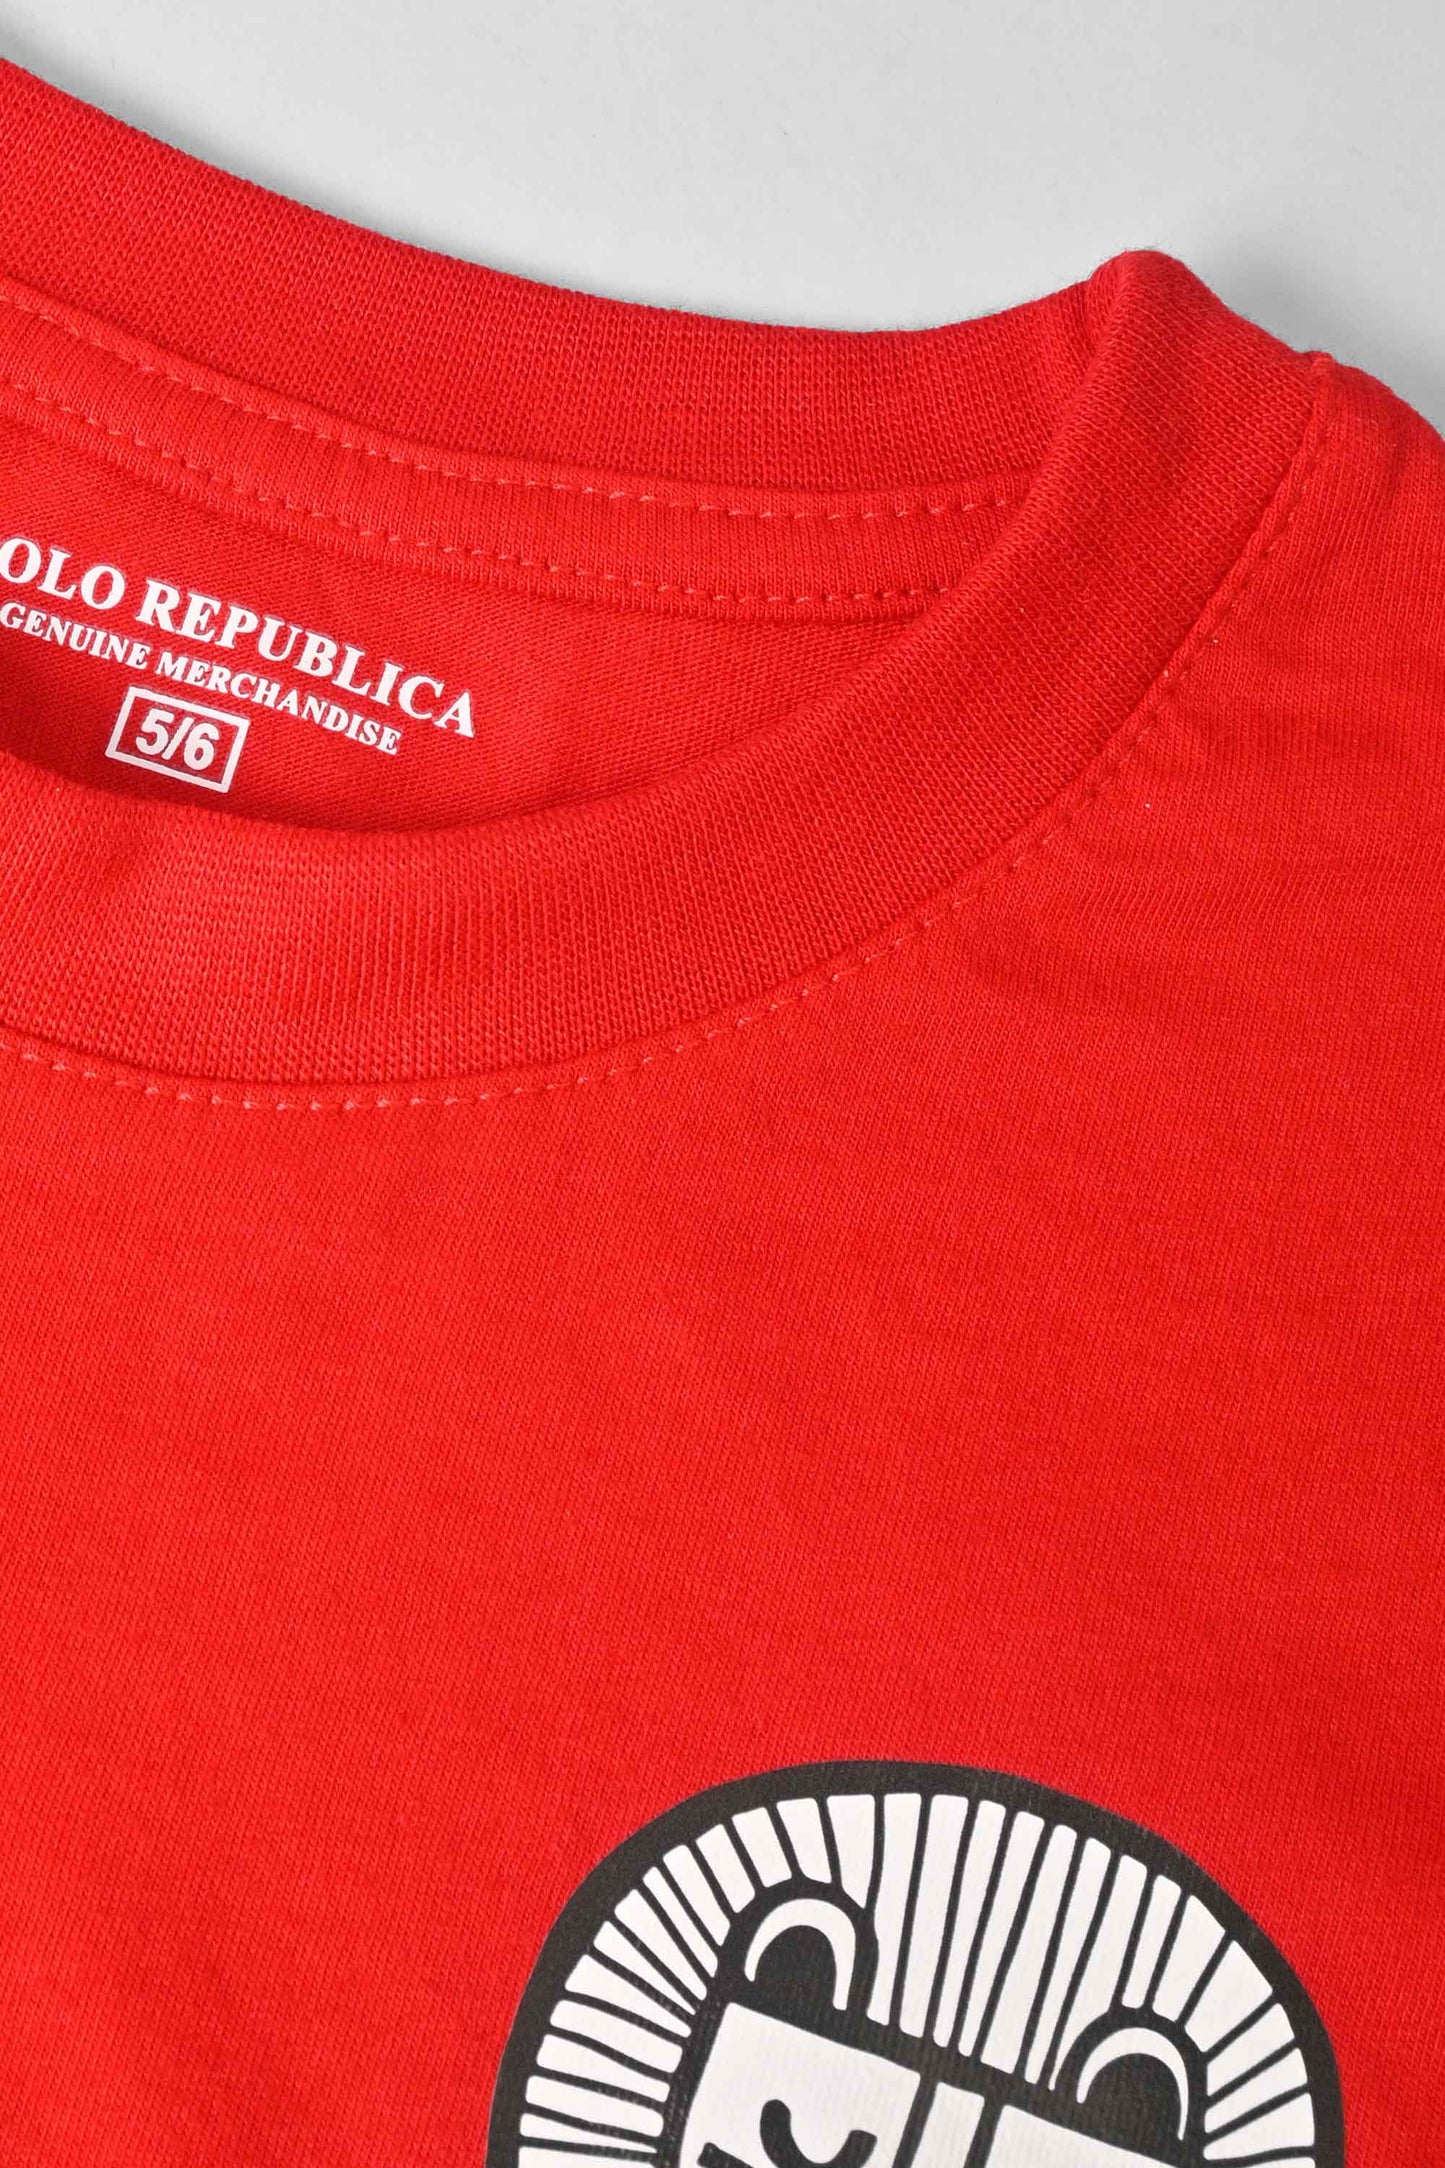 Polo Republica Boy's Lion Printed Tee Shirt Boy's Tee Shirt Polo Republica 